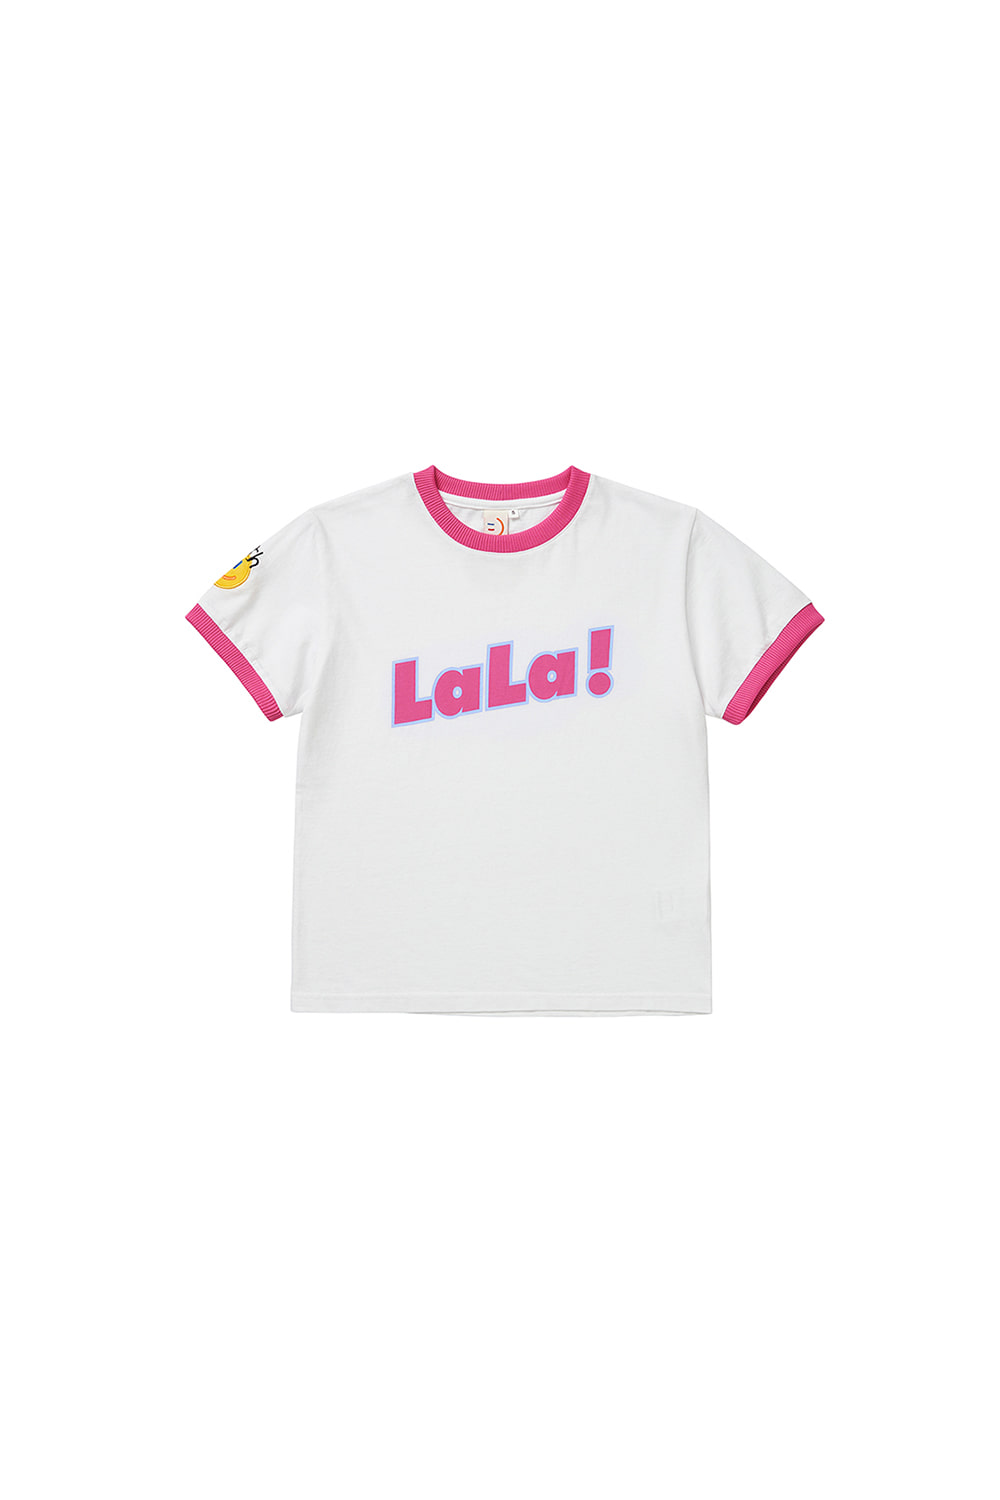 LaLa Kids Twotone T-shirt [Pink]